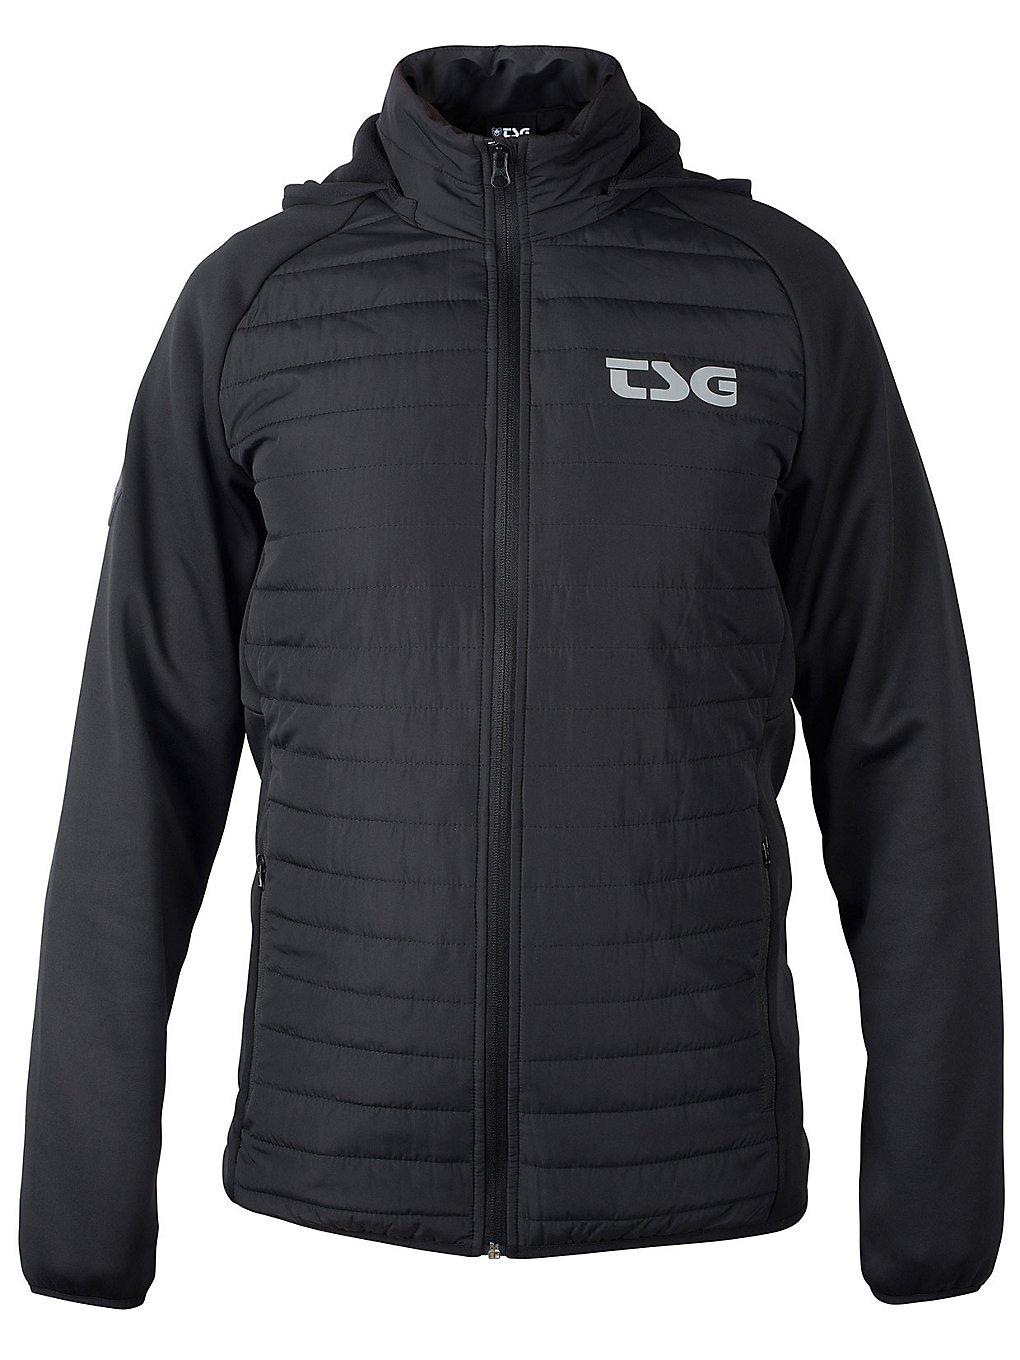 TSG Insulation Jacket black kaufen